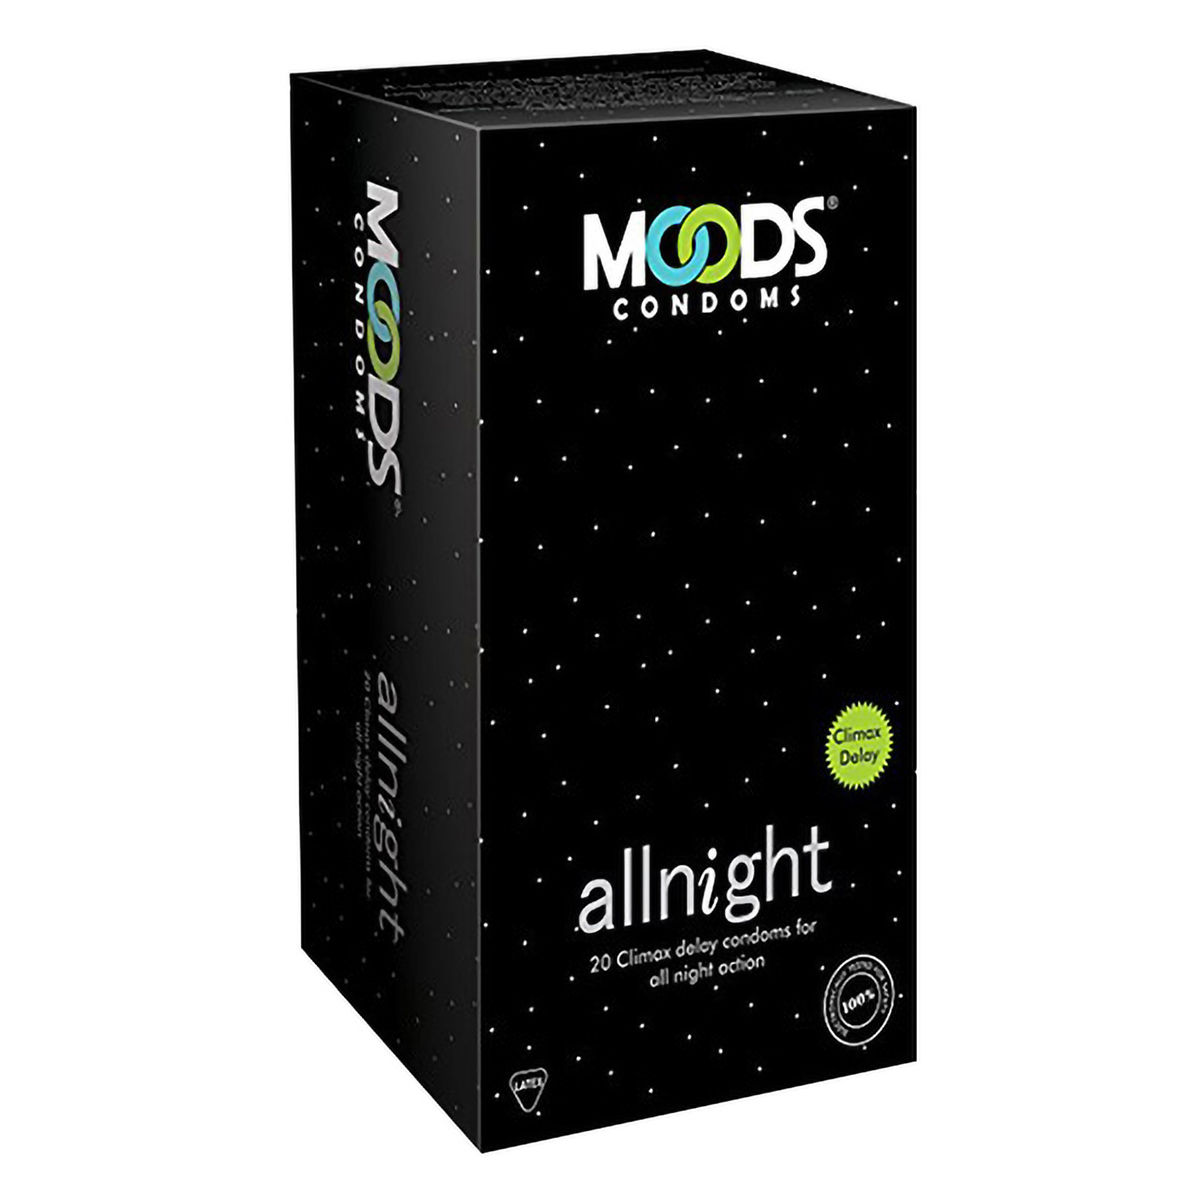 Buy Moods Allnight Condoms, 20 Count Online